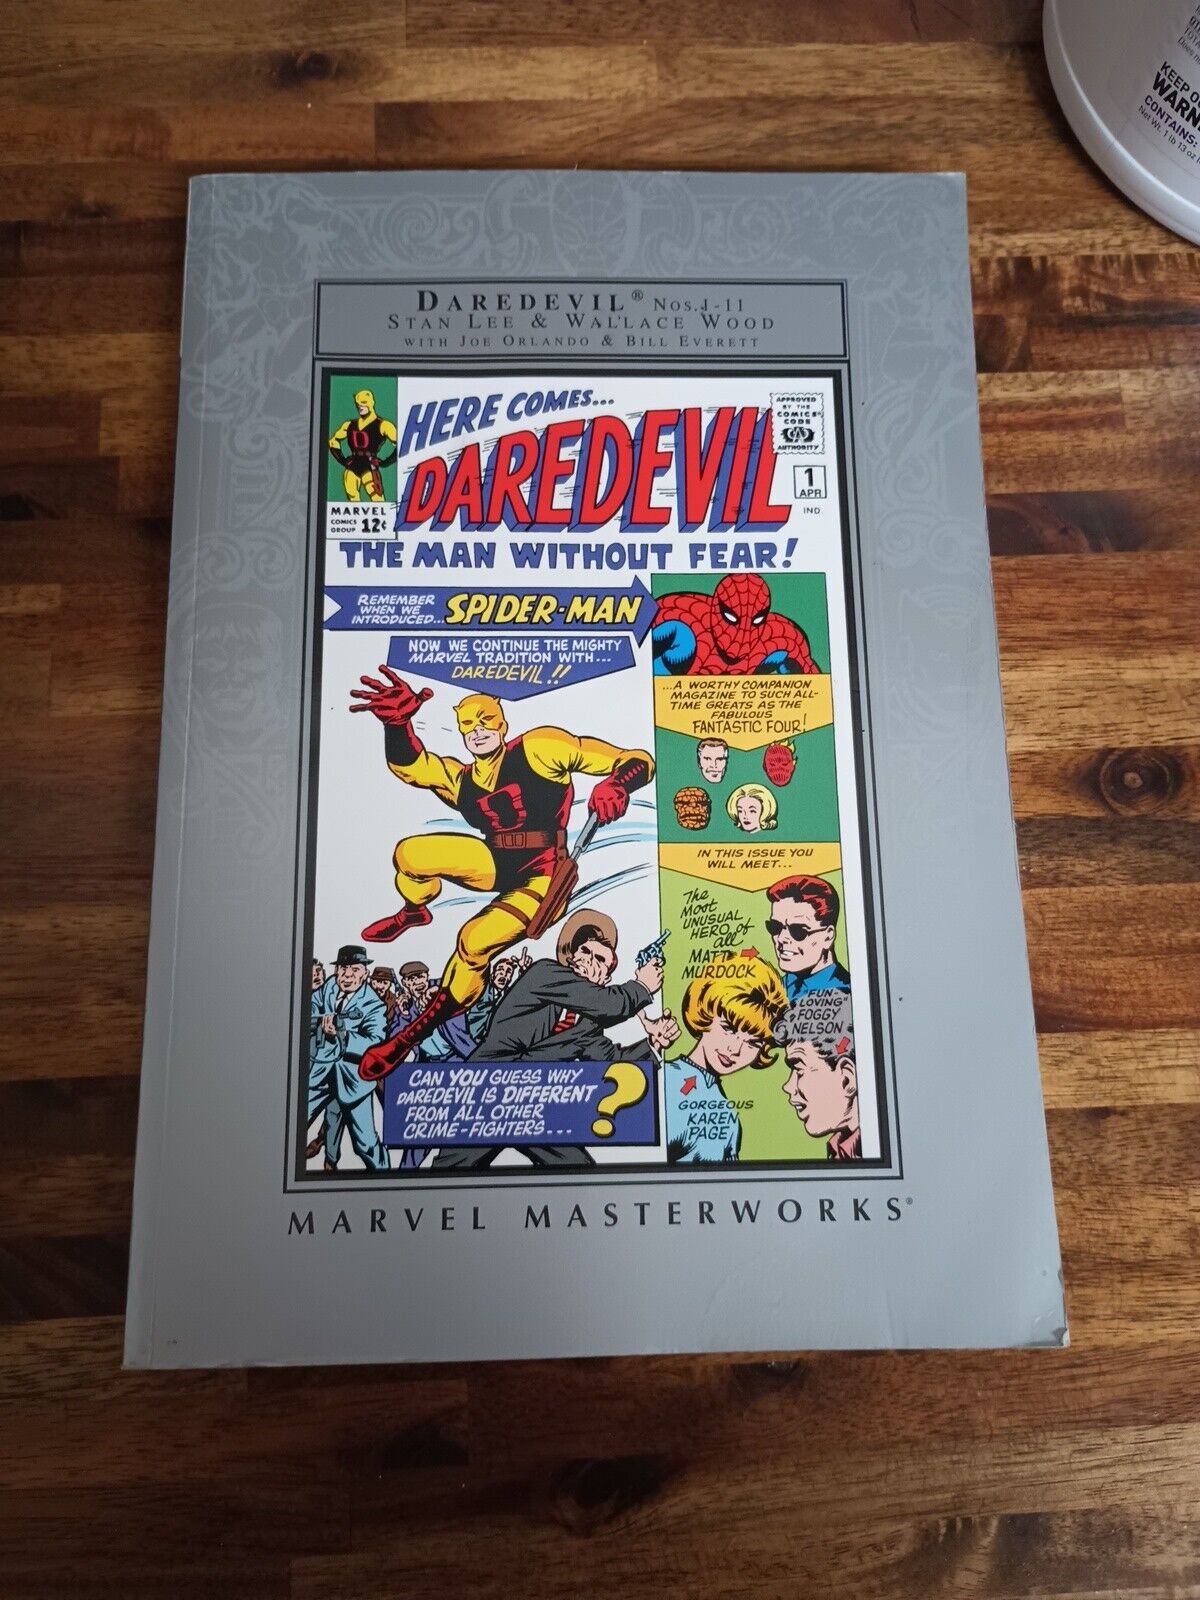 Marvel Masterworks: Daredevil #1 (Marvel, December 2003)